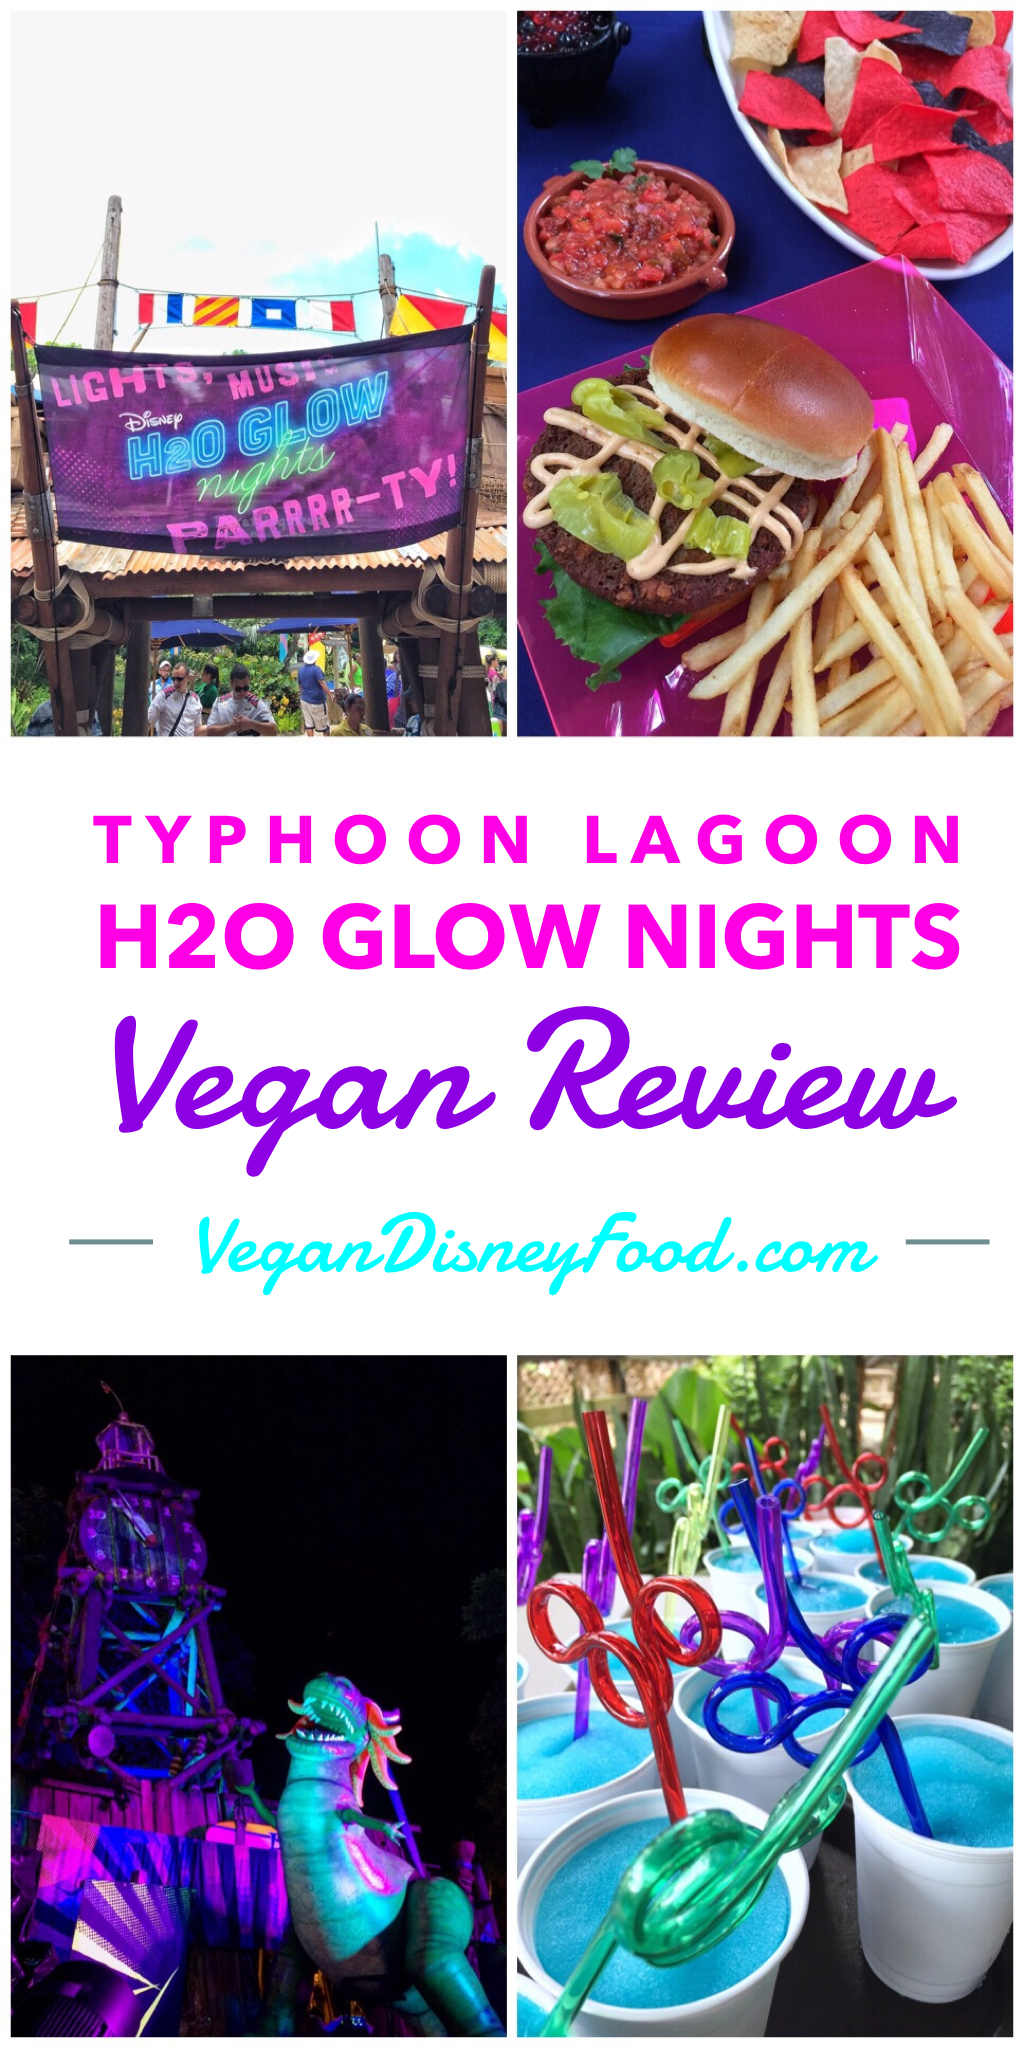 Vegan Food Review - H2O Glow Nights at Disney’s Typhoon Lagoon Water Park in Walt Disney World